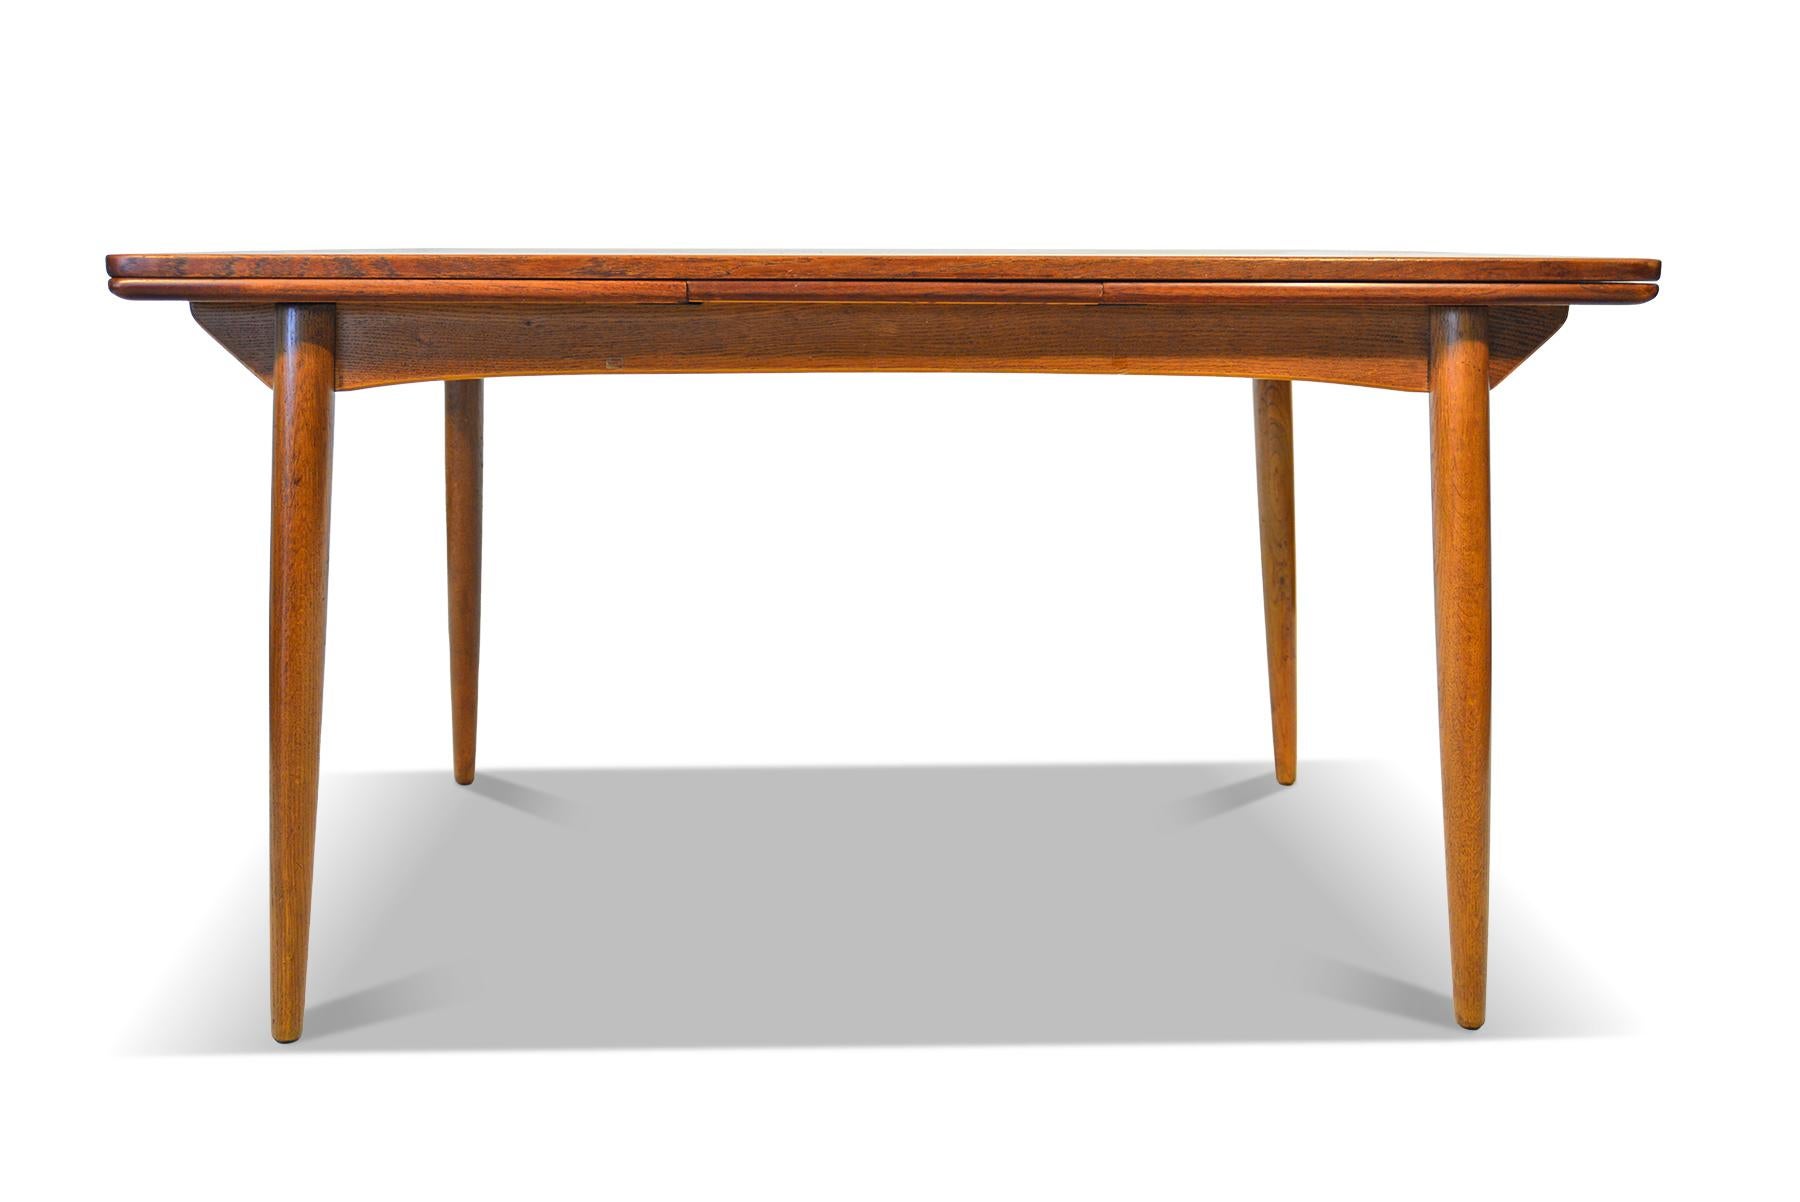 20th Century Danish Modern Rectangular Draw Leaf Dining Table in Teak and Oak